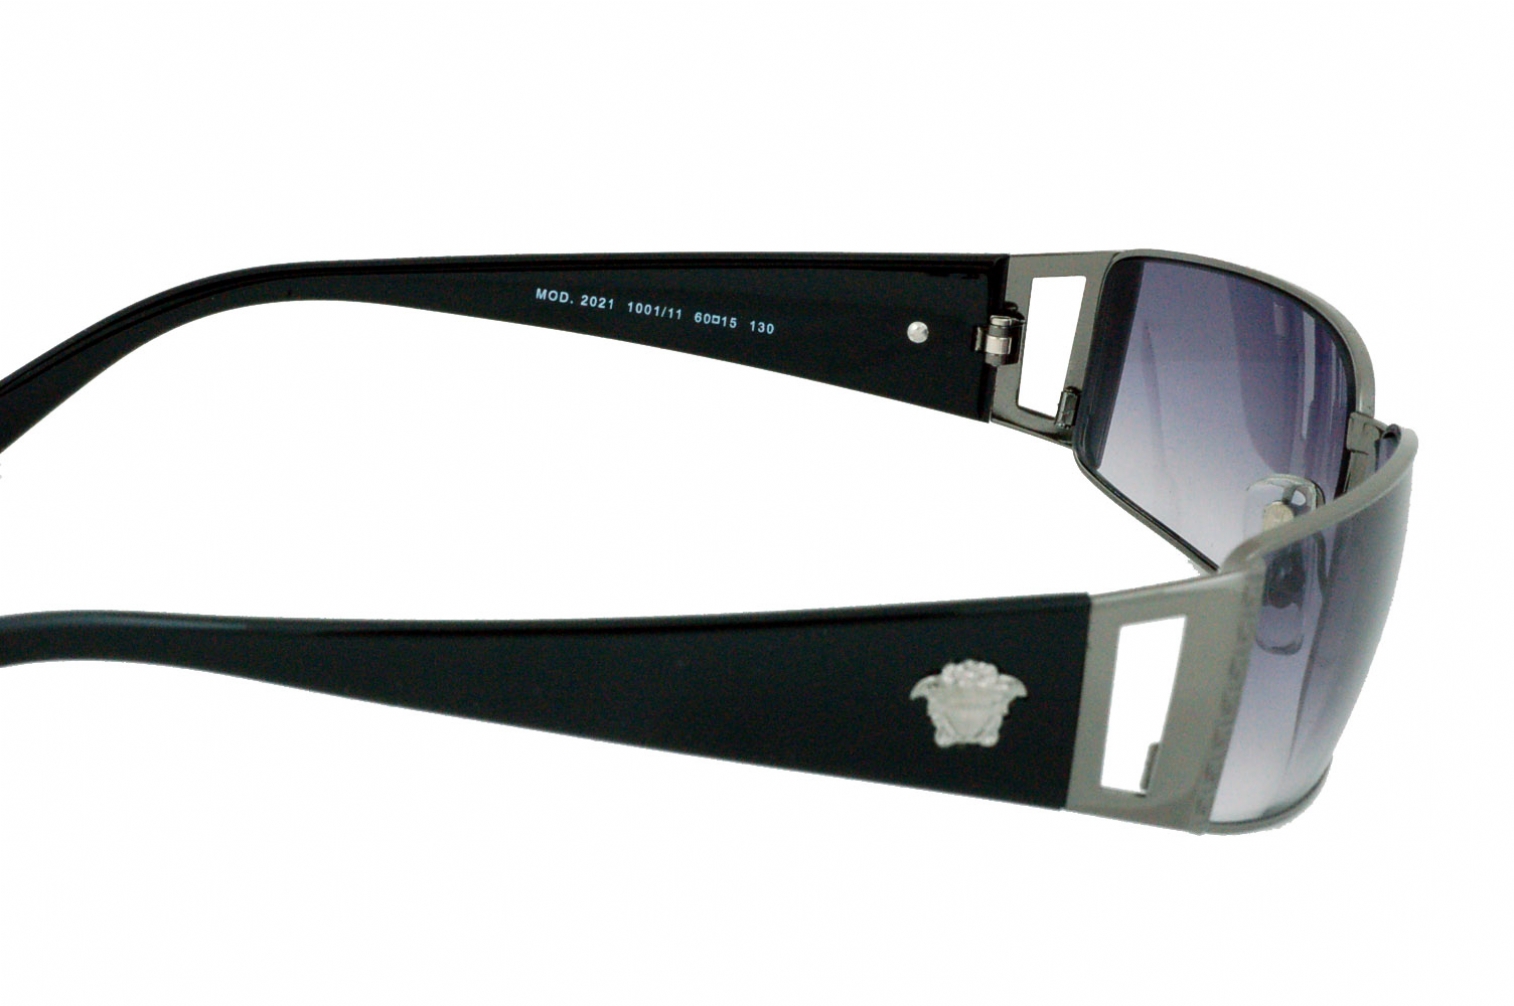 versace sunglasses model 2021